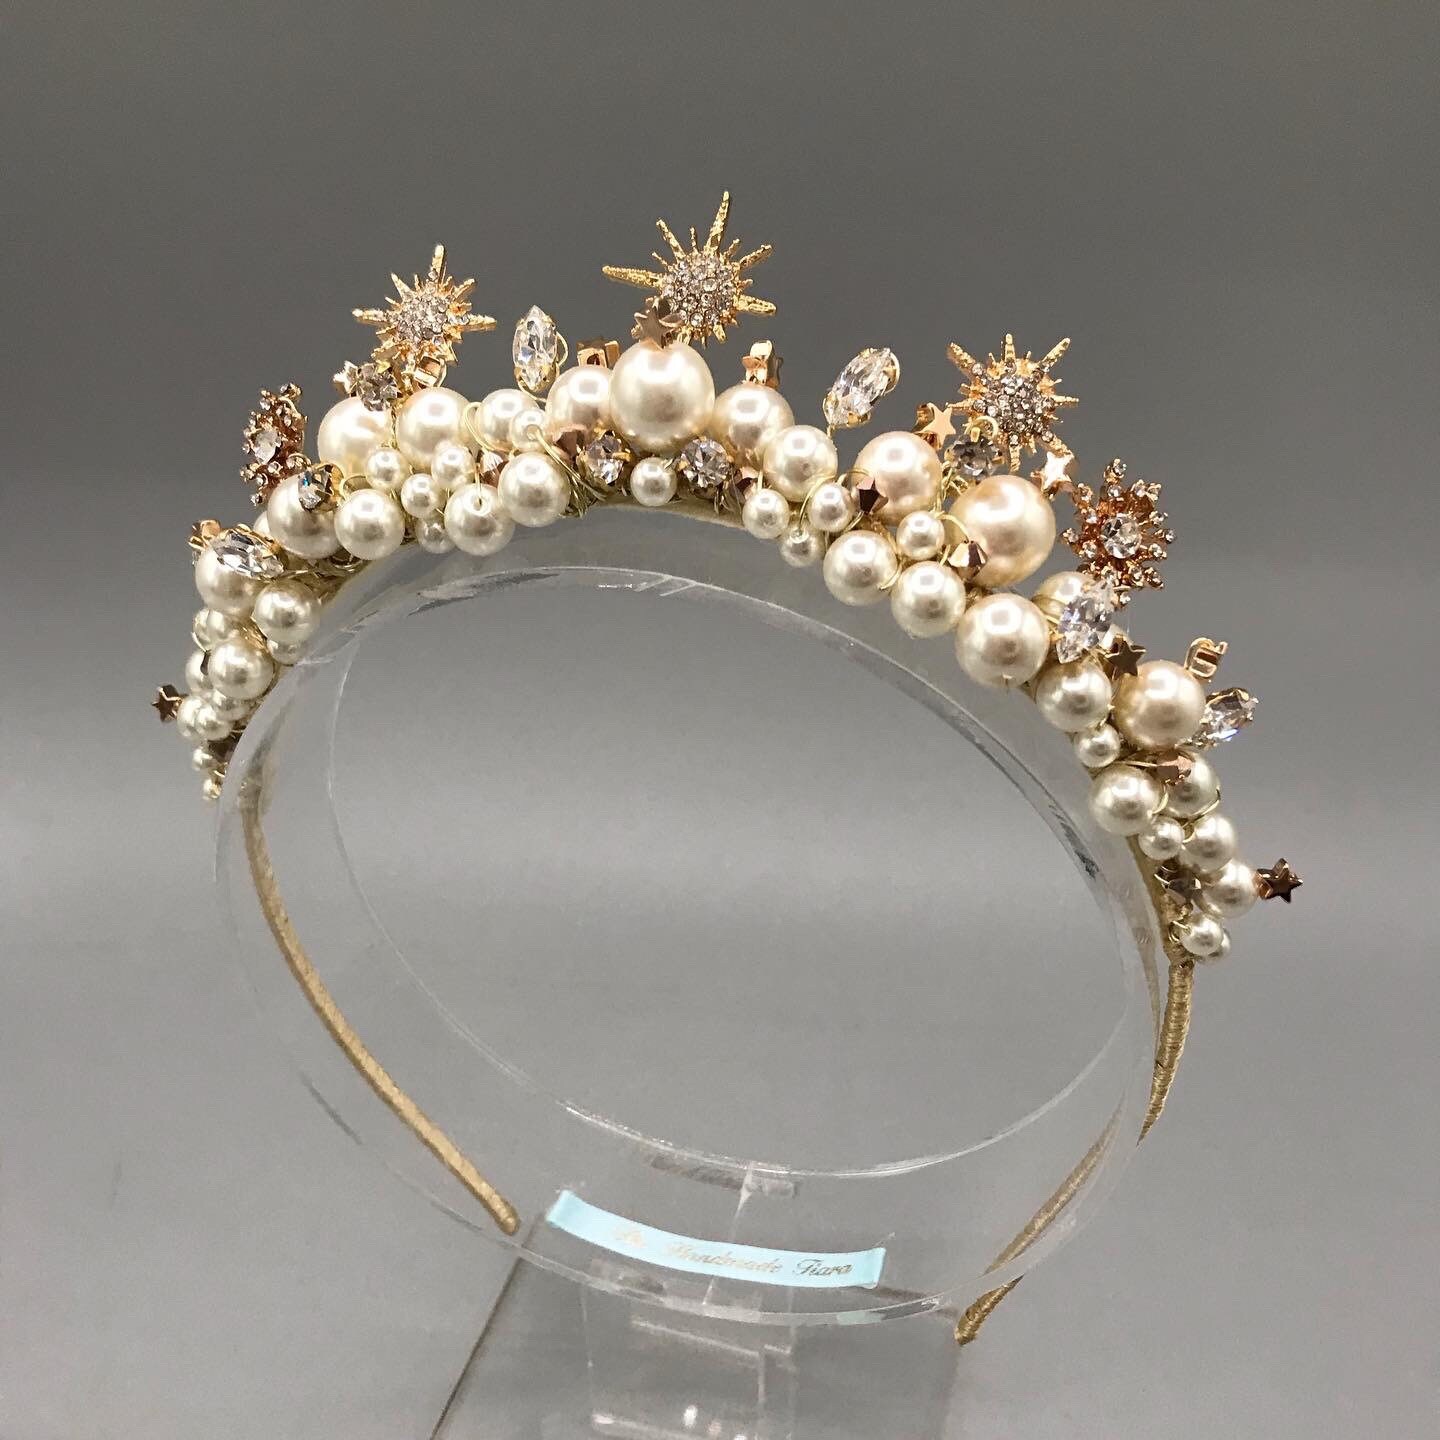 Celestial Star Bridal Crown Silver Star Tiara Star | Etsy